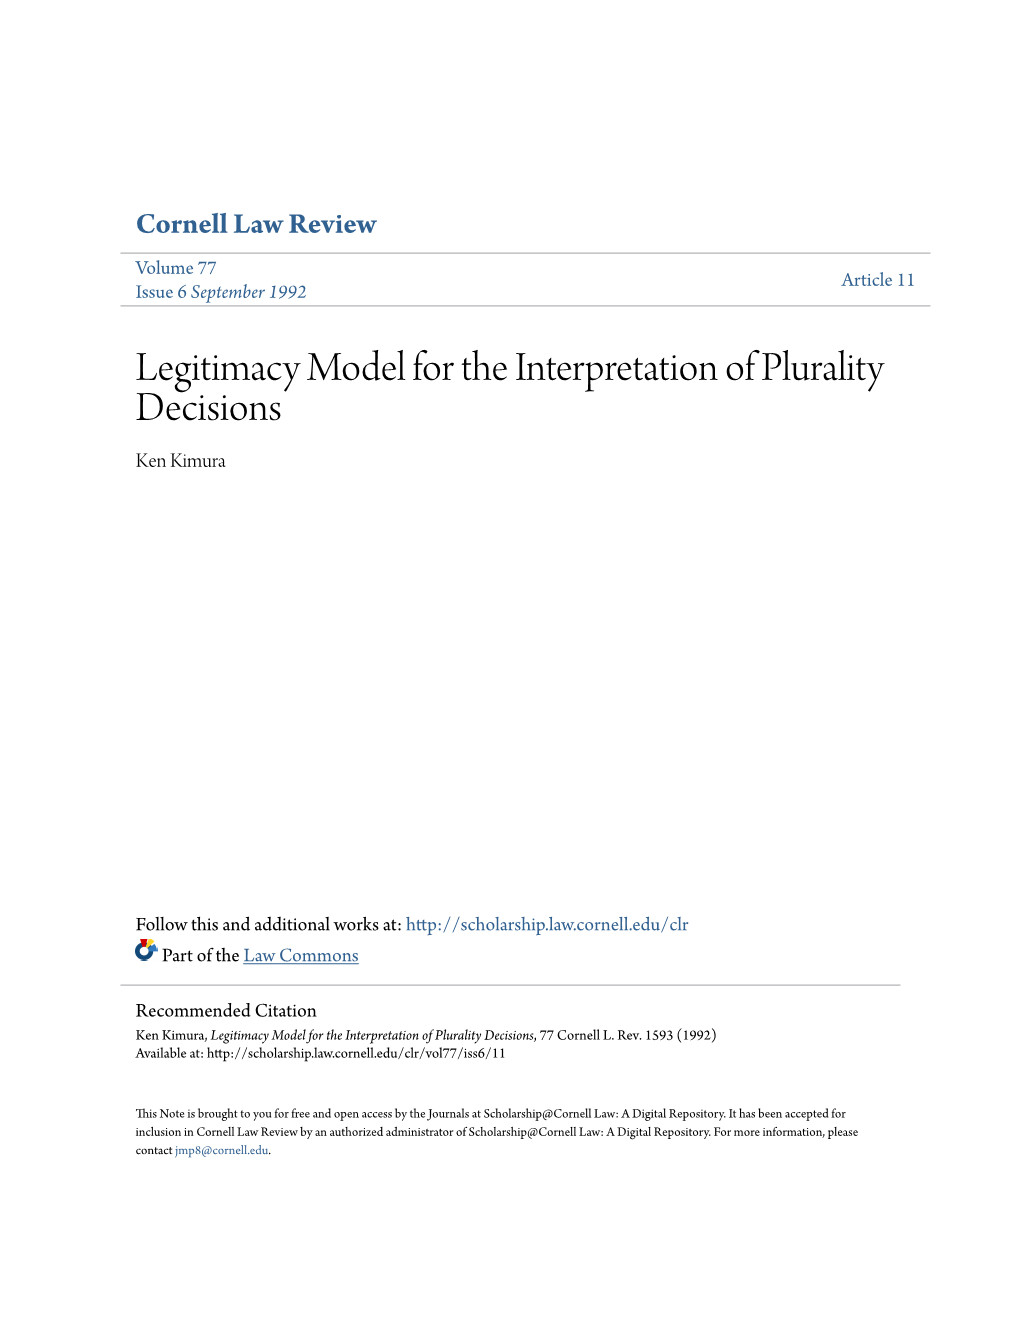 Legitimacy Model for the Interpretation of Plurality Decisions Ken Kimura